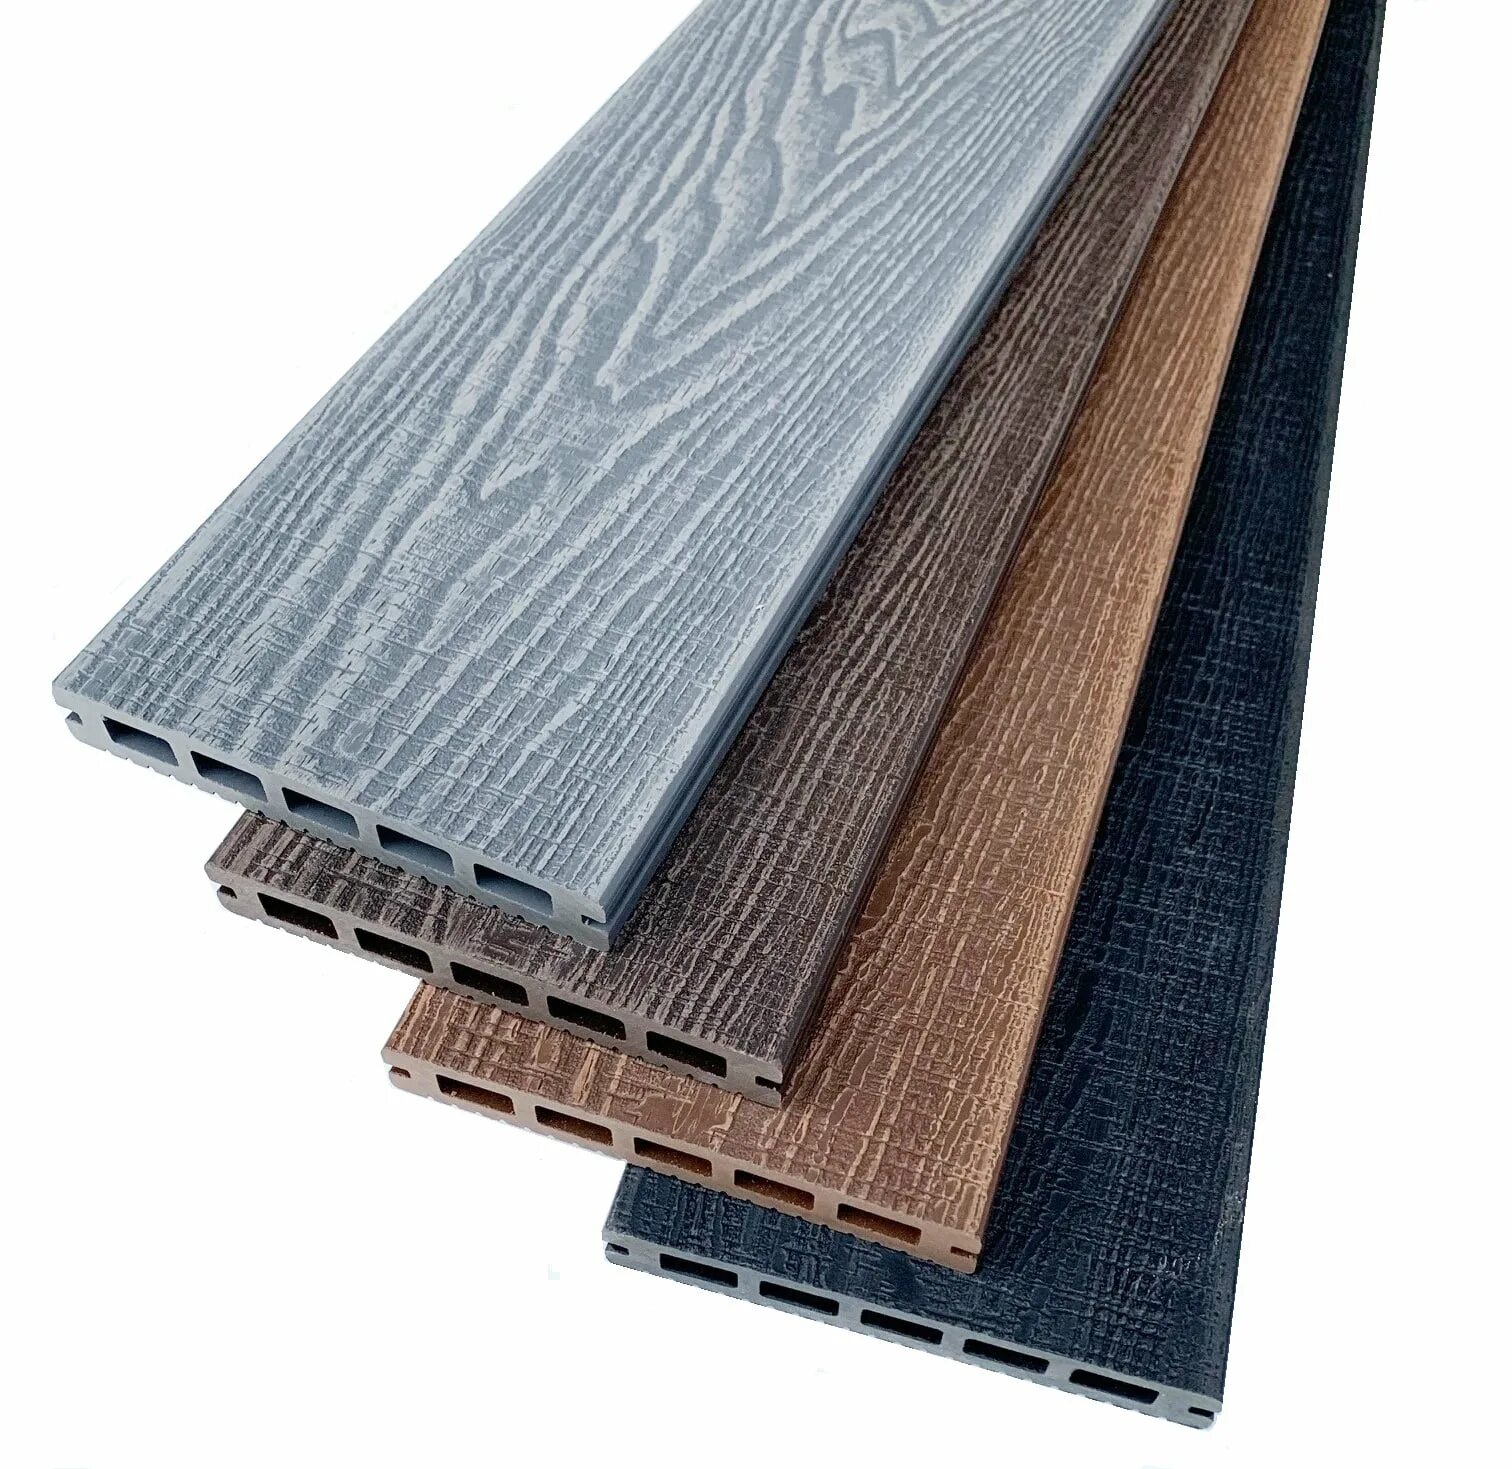 Www boards. UPVC Bambu Deck покрытие для пола. Композит. WPC Board. Plastic Decking Boards.